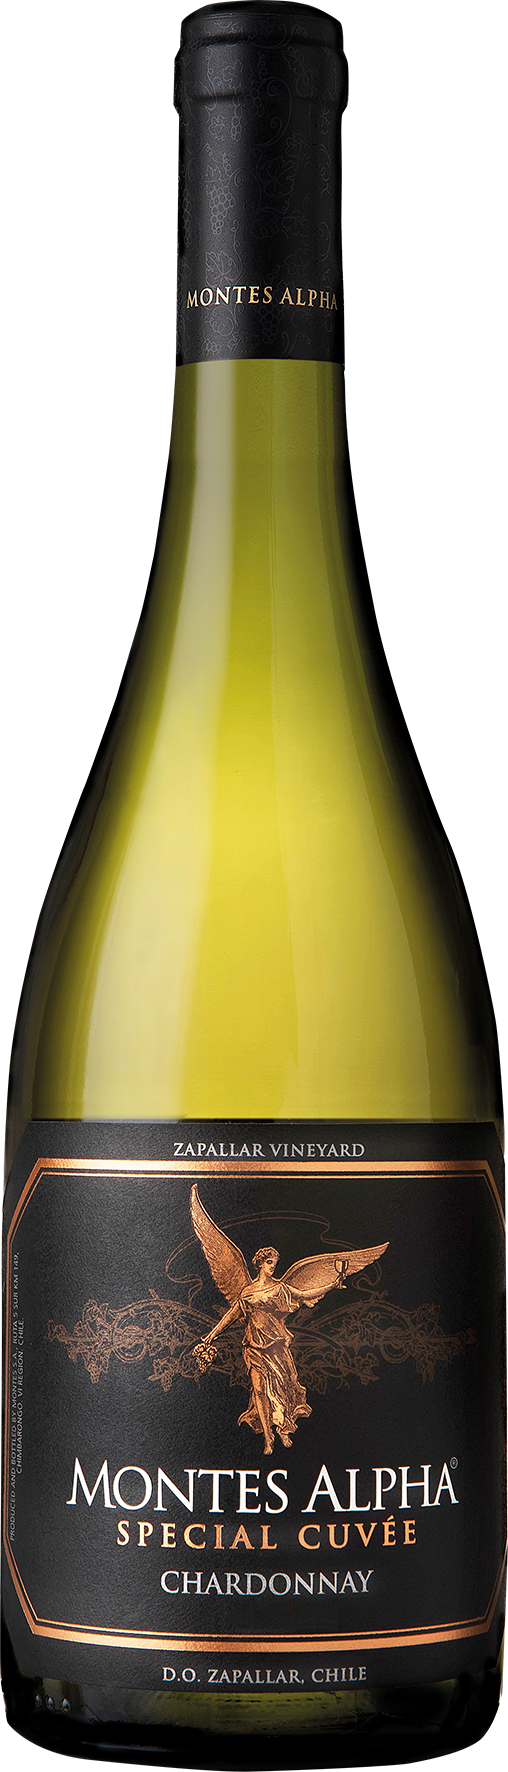 Montes Alpha Special Cuvee Chardonnay 